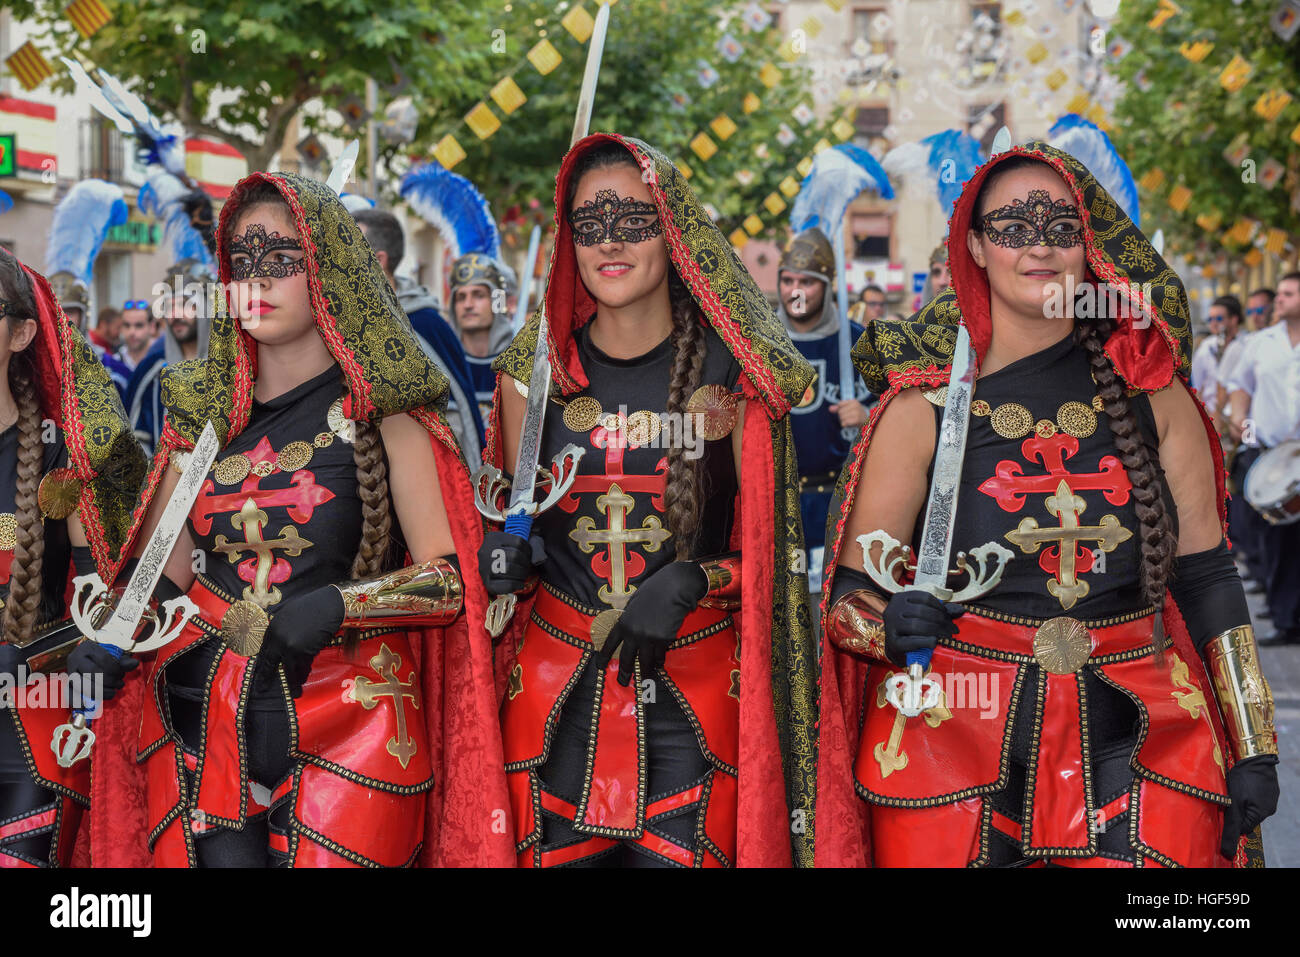 Women in historic clothing, Moors and Christians Parade, Moros y Cristianos, Jijona or Xixona, Province of Alicante Stock Photo